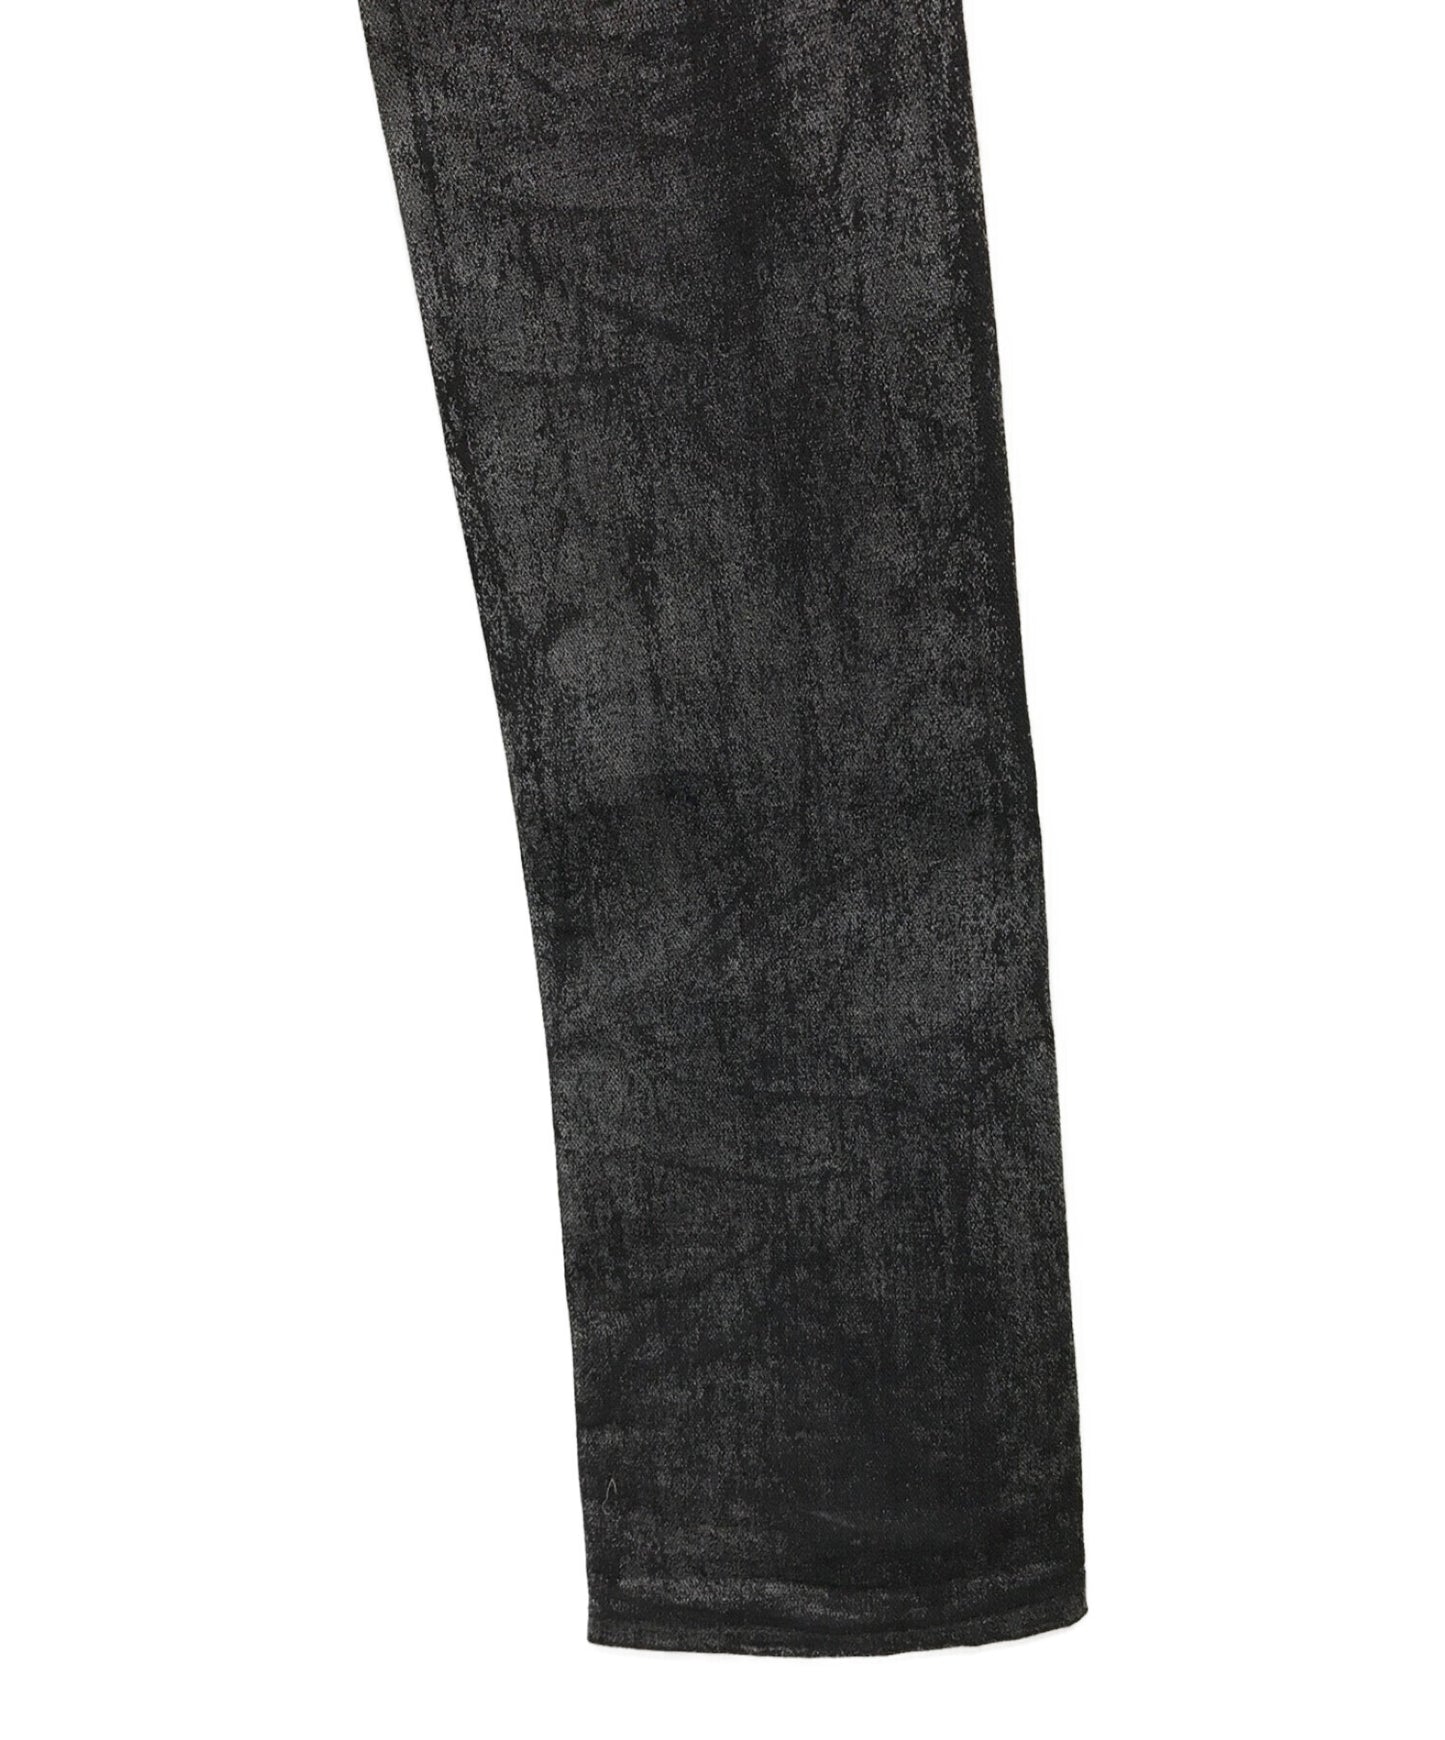 Dior Homme由Hedi Slimane塗層瘦牛仔褲7E3110910225